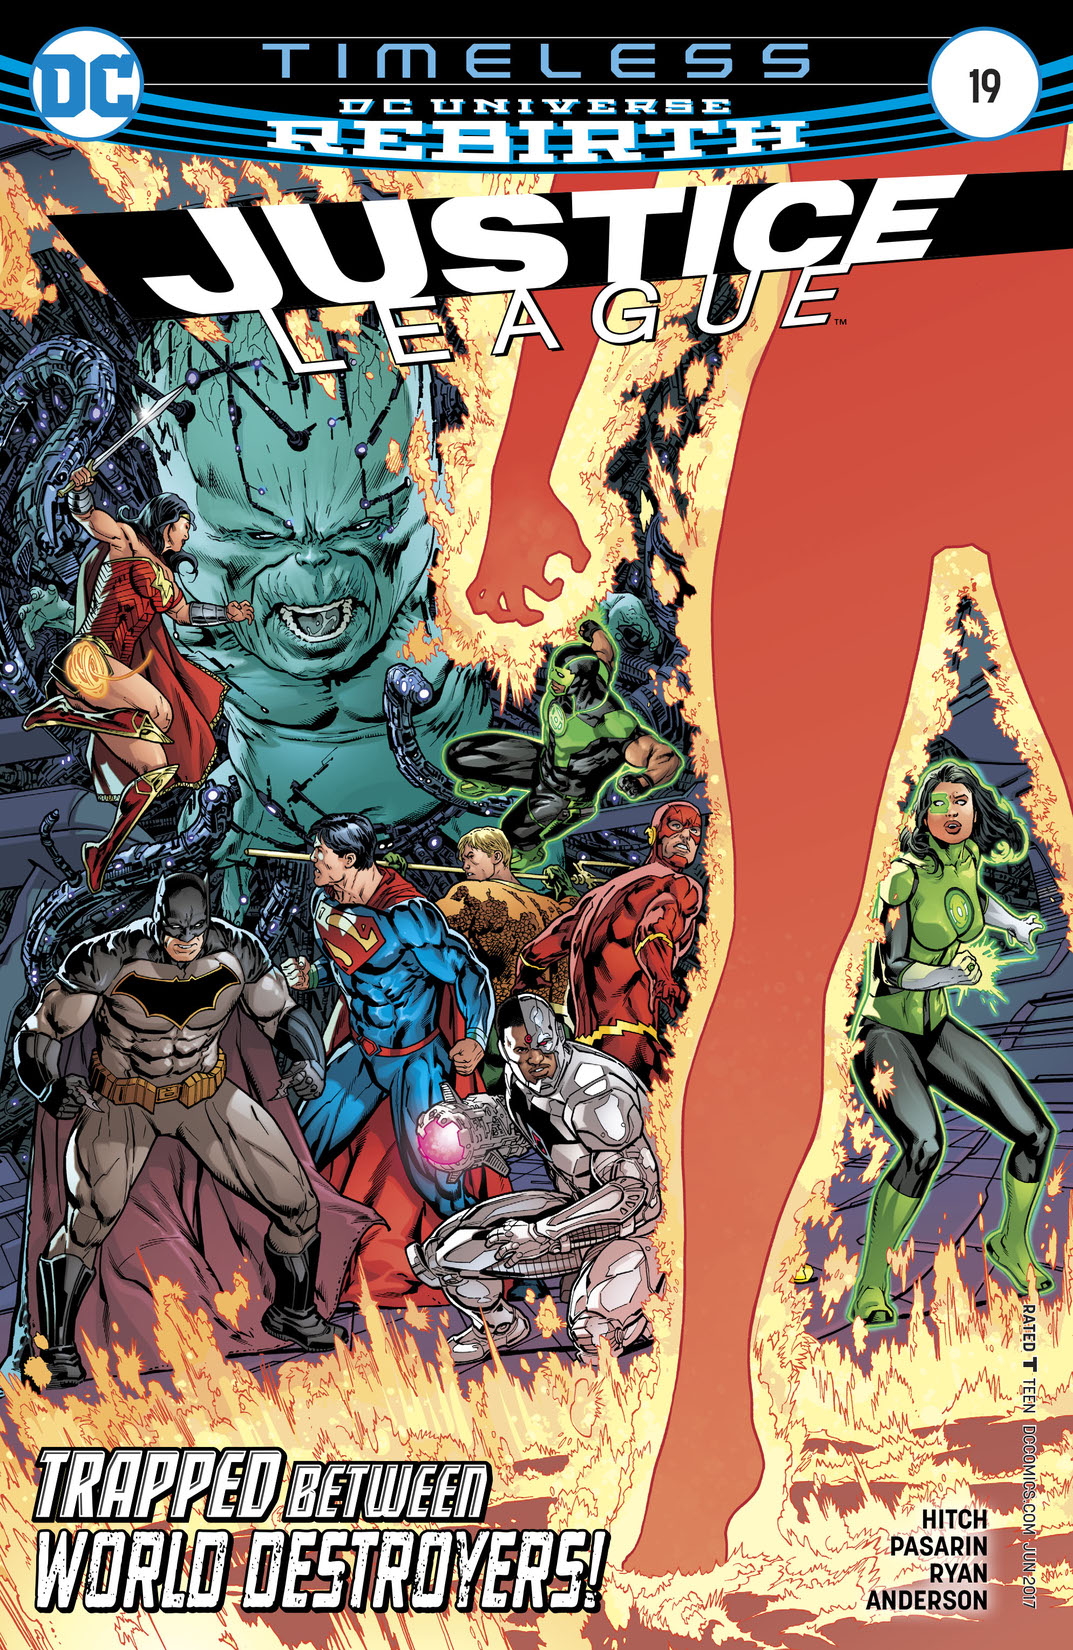 Justice League (2016-) #19 preview images